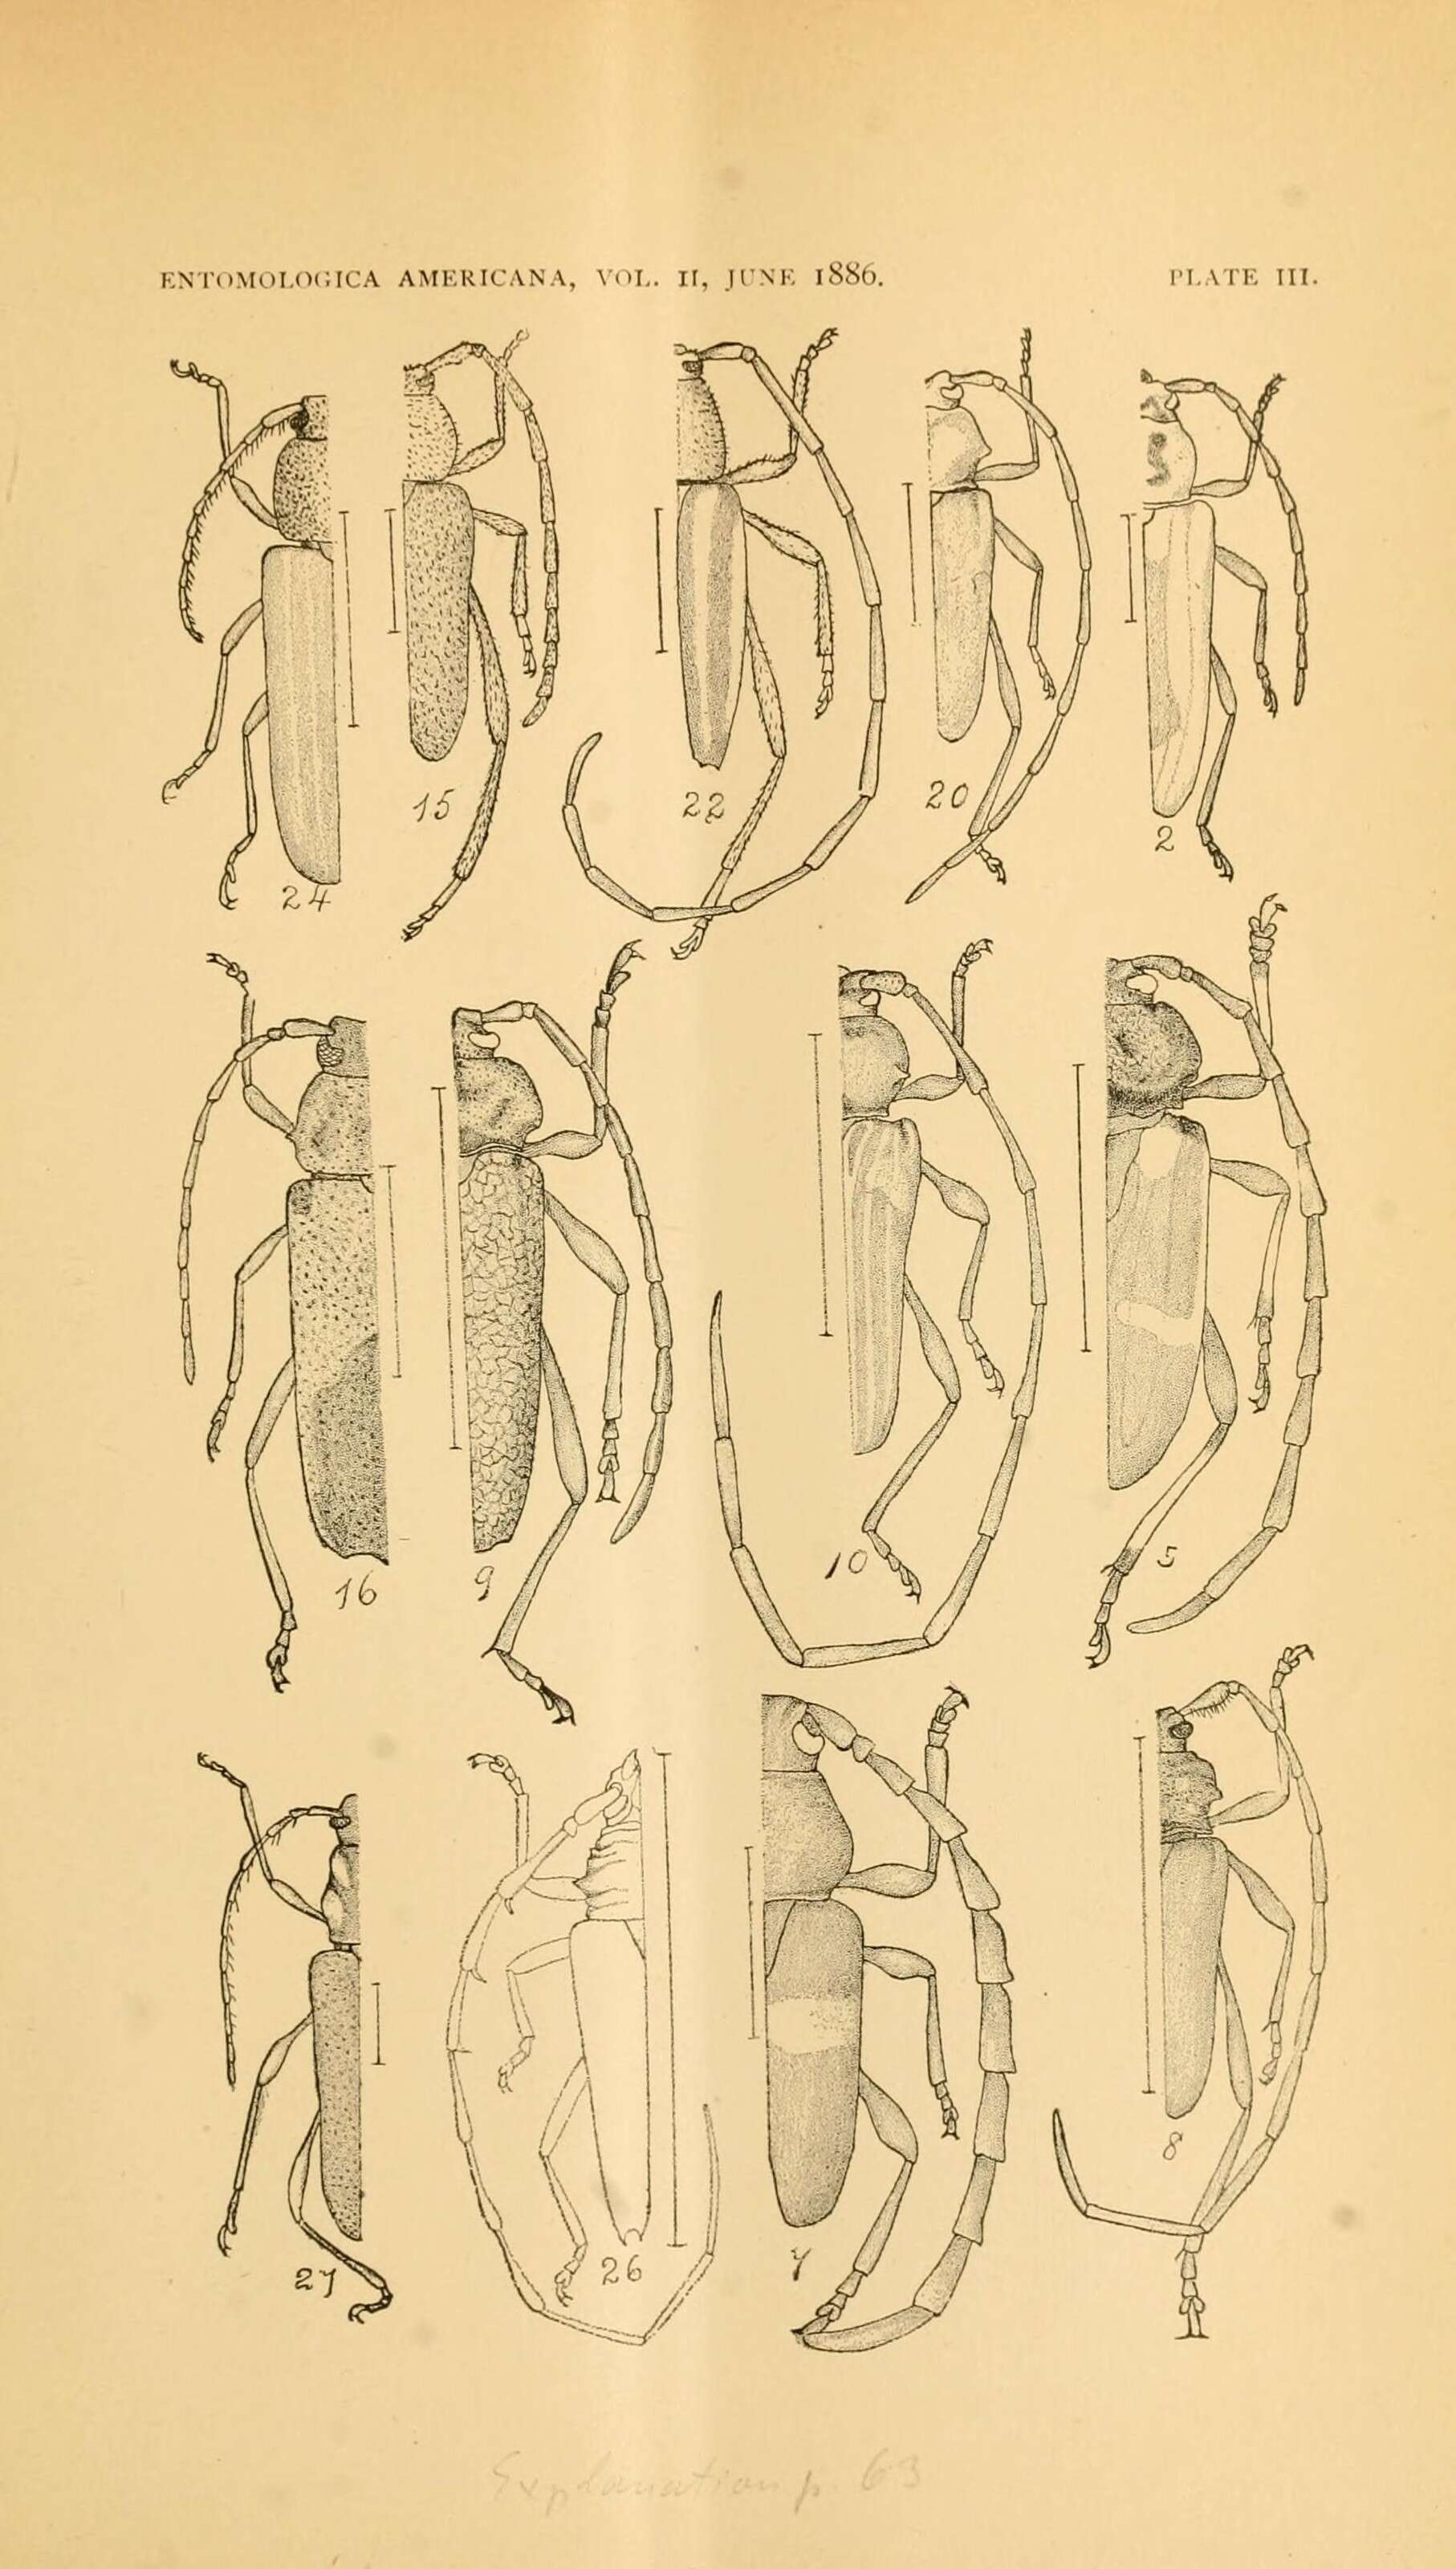 Image of long-horned beetles